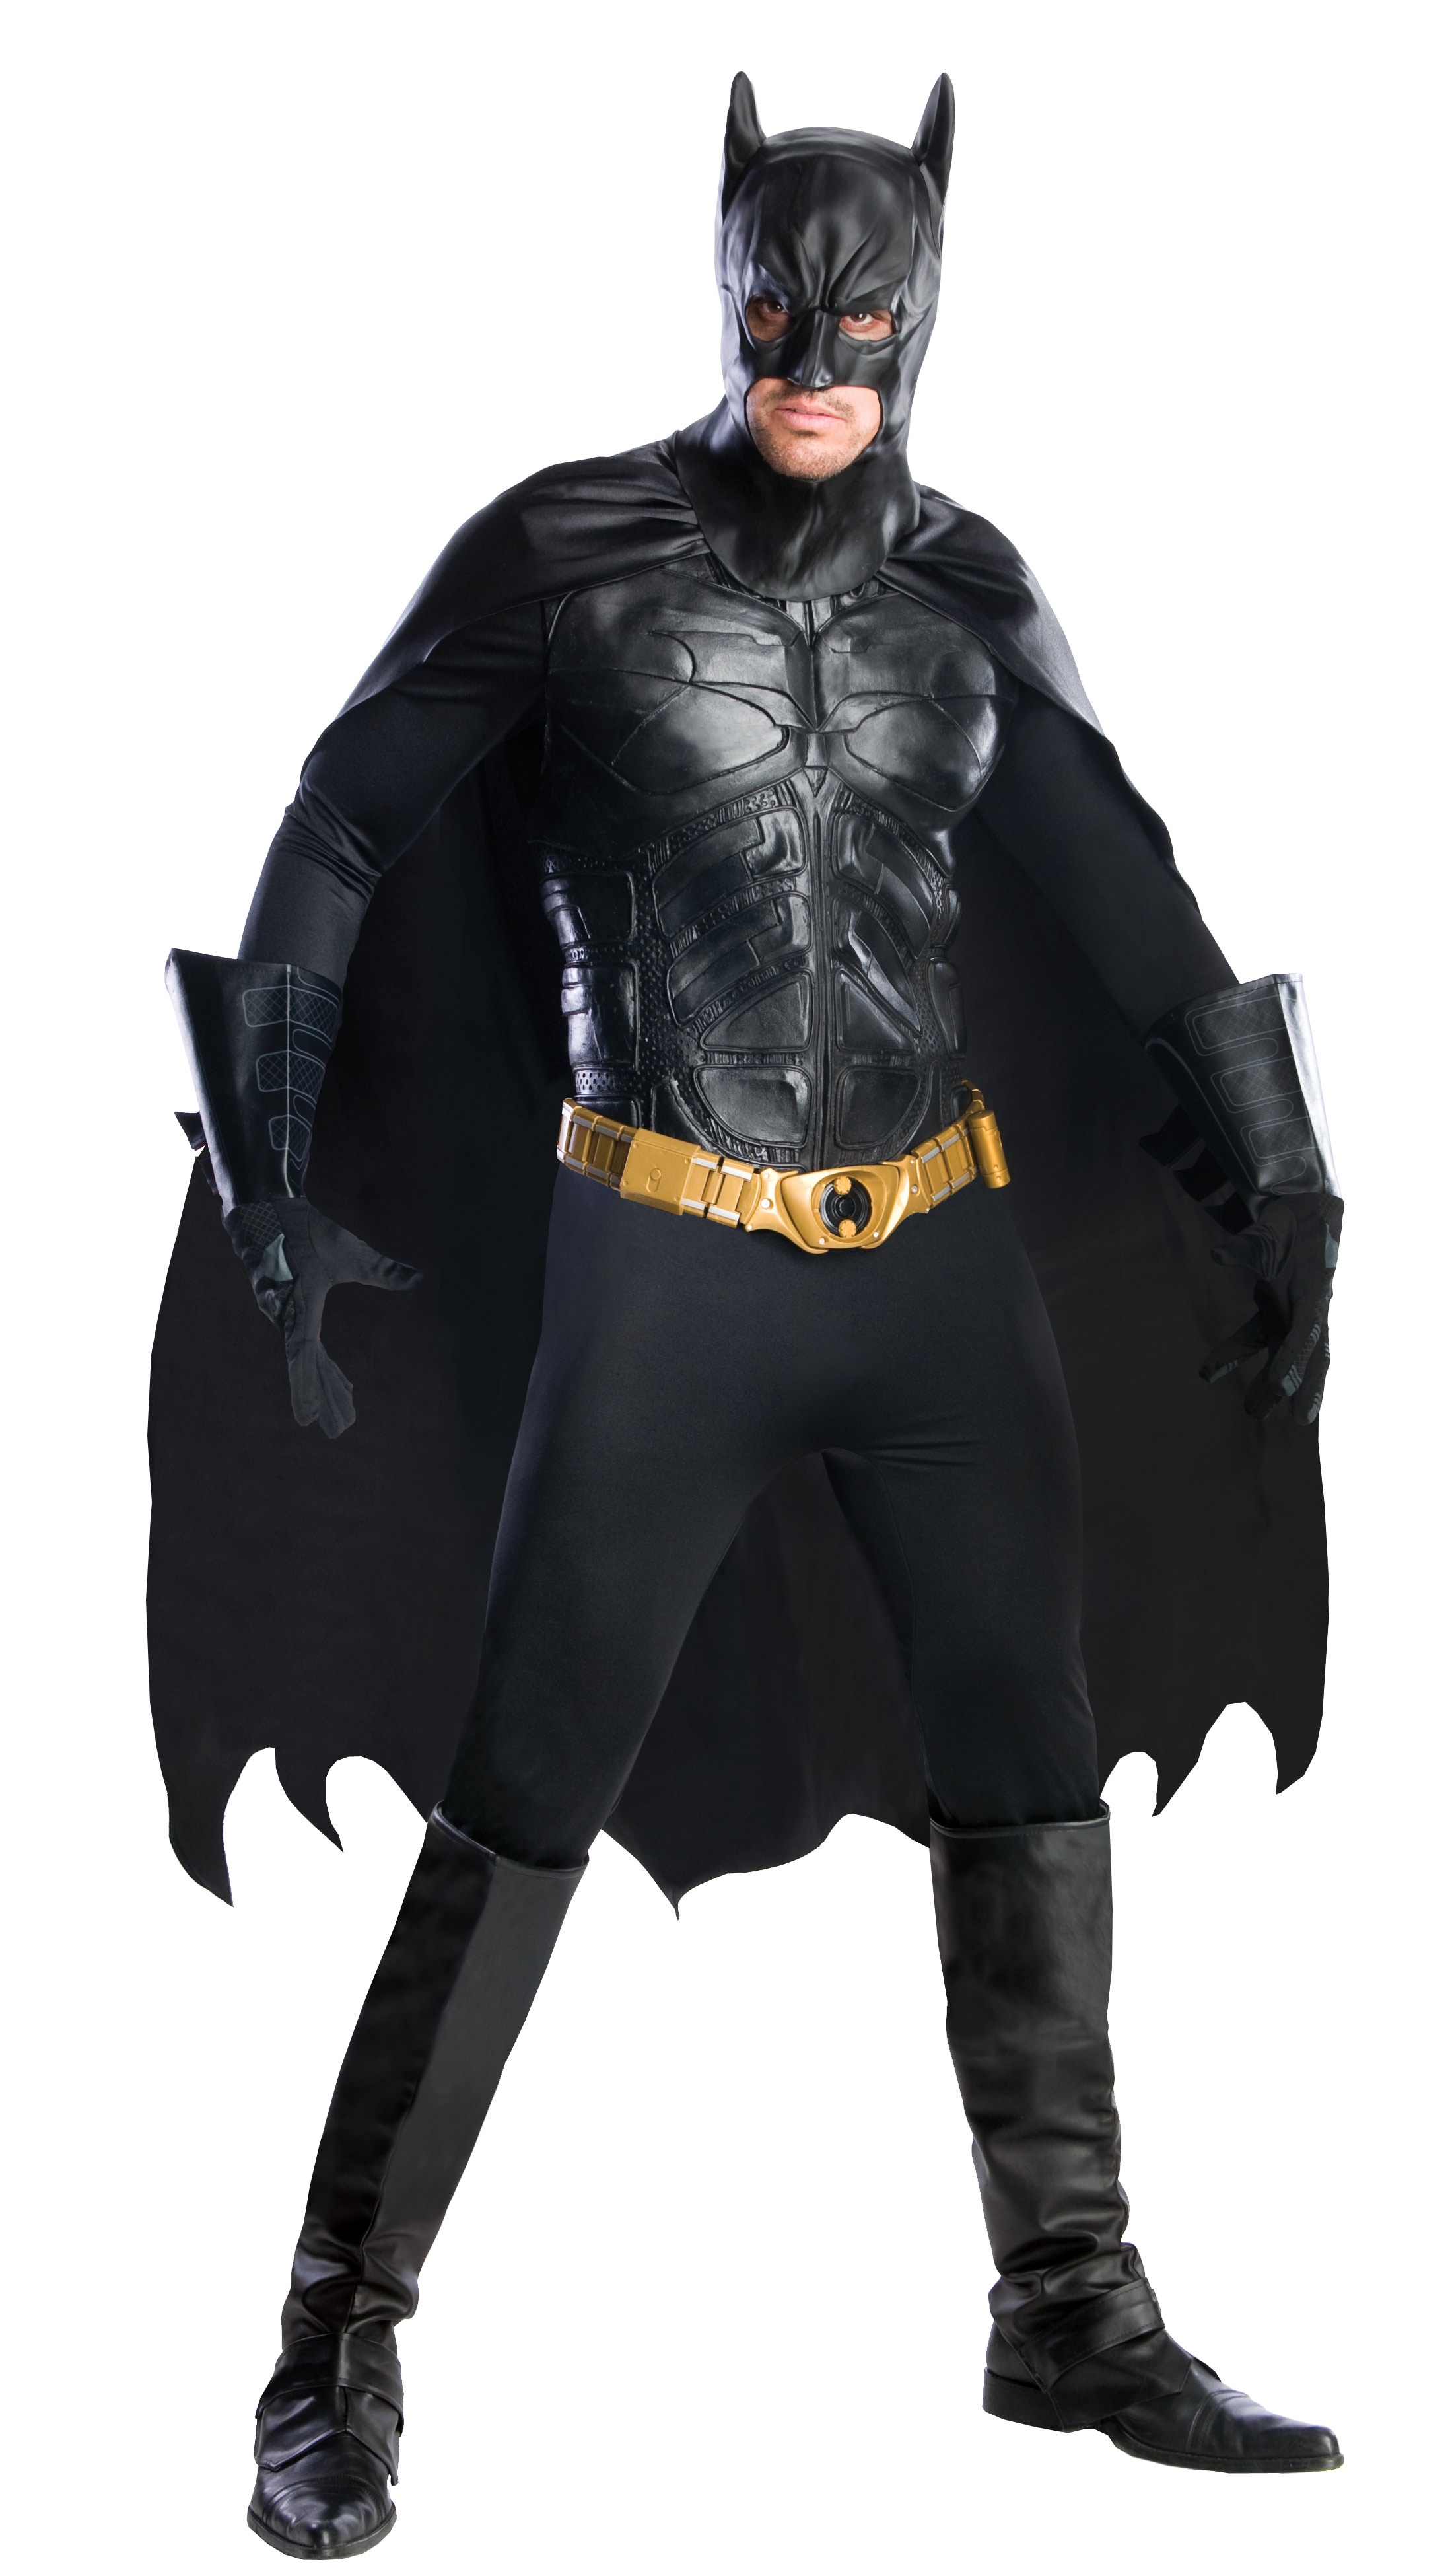 Home >> Batman Costume >> Adult Batman Costume >> Dark Knig...